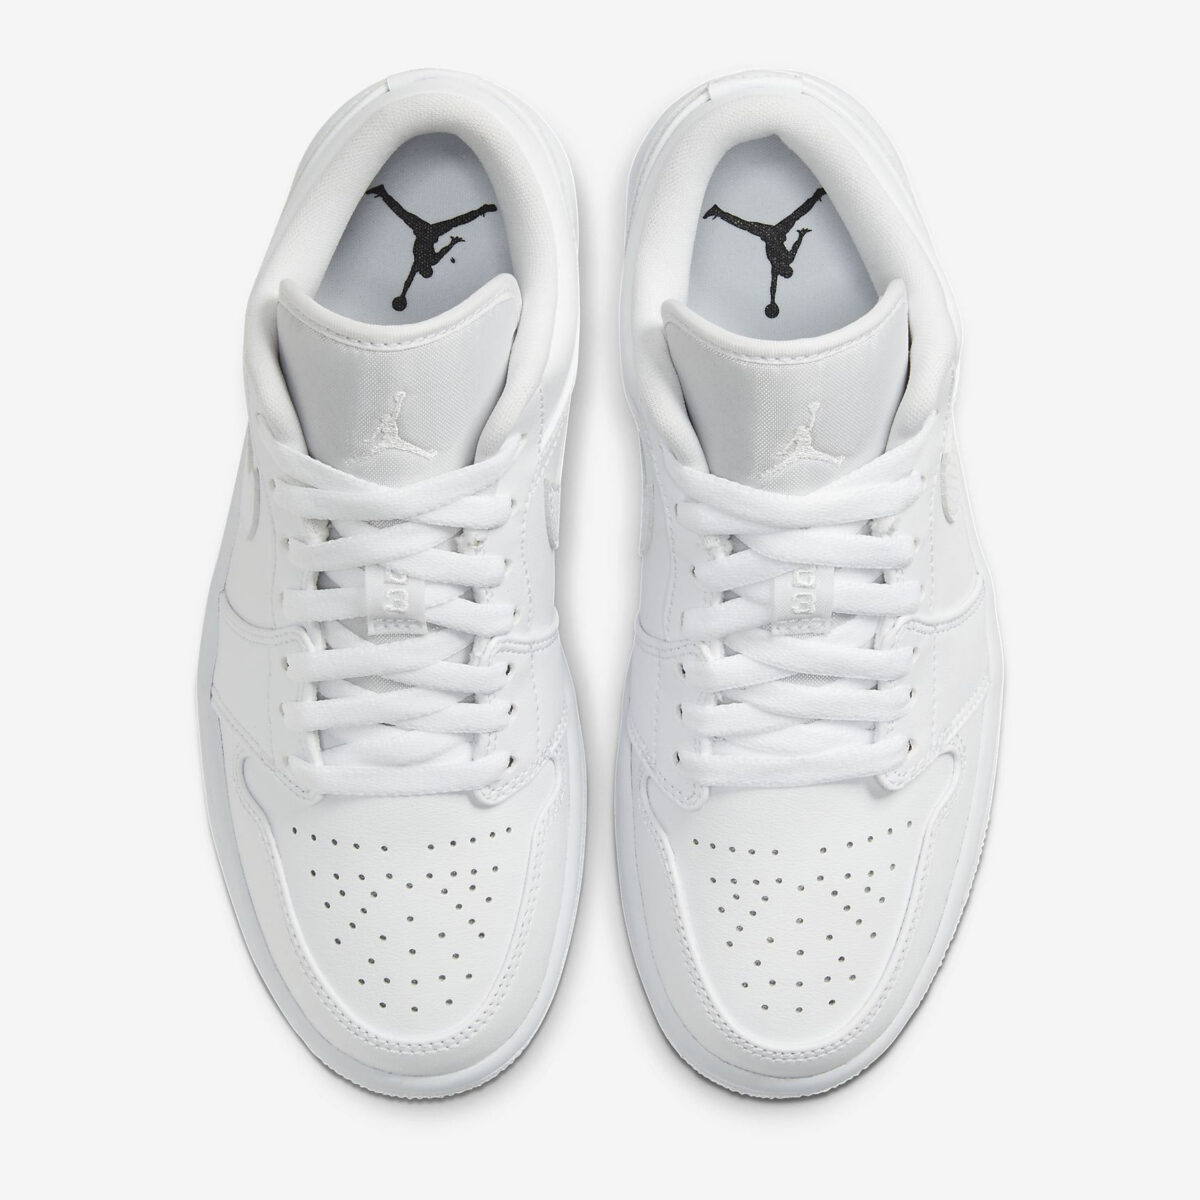 Herren Schuhe Air Jordan 1 Low weiß kaufen